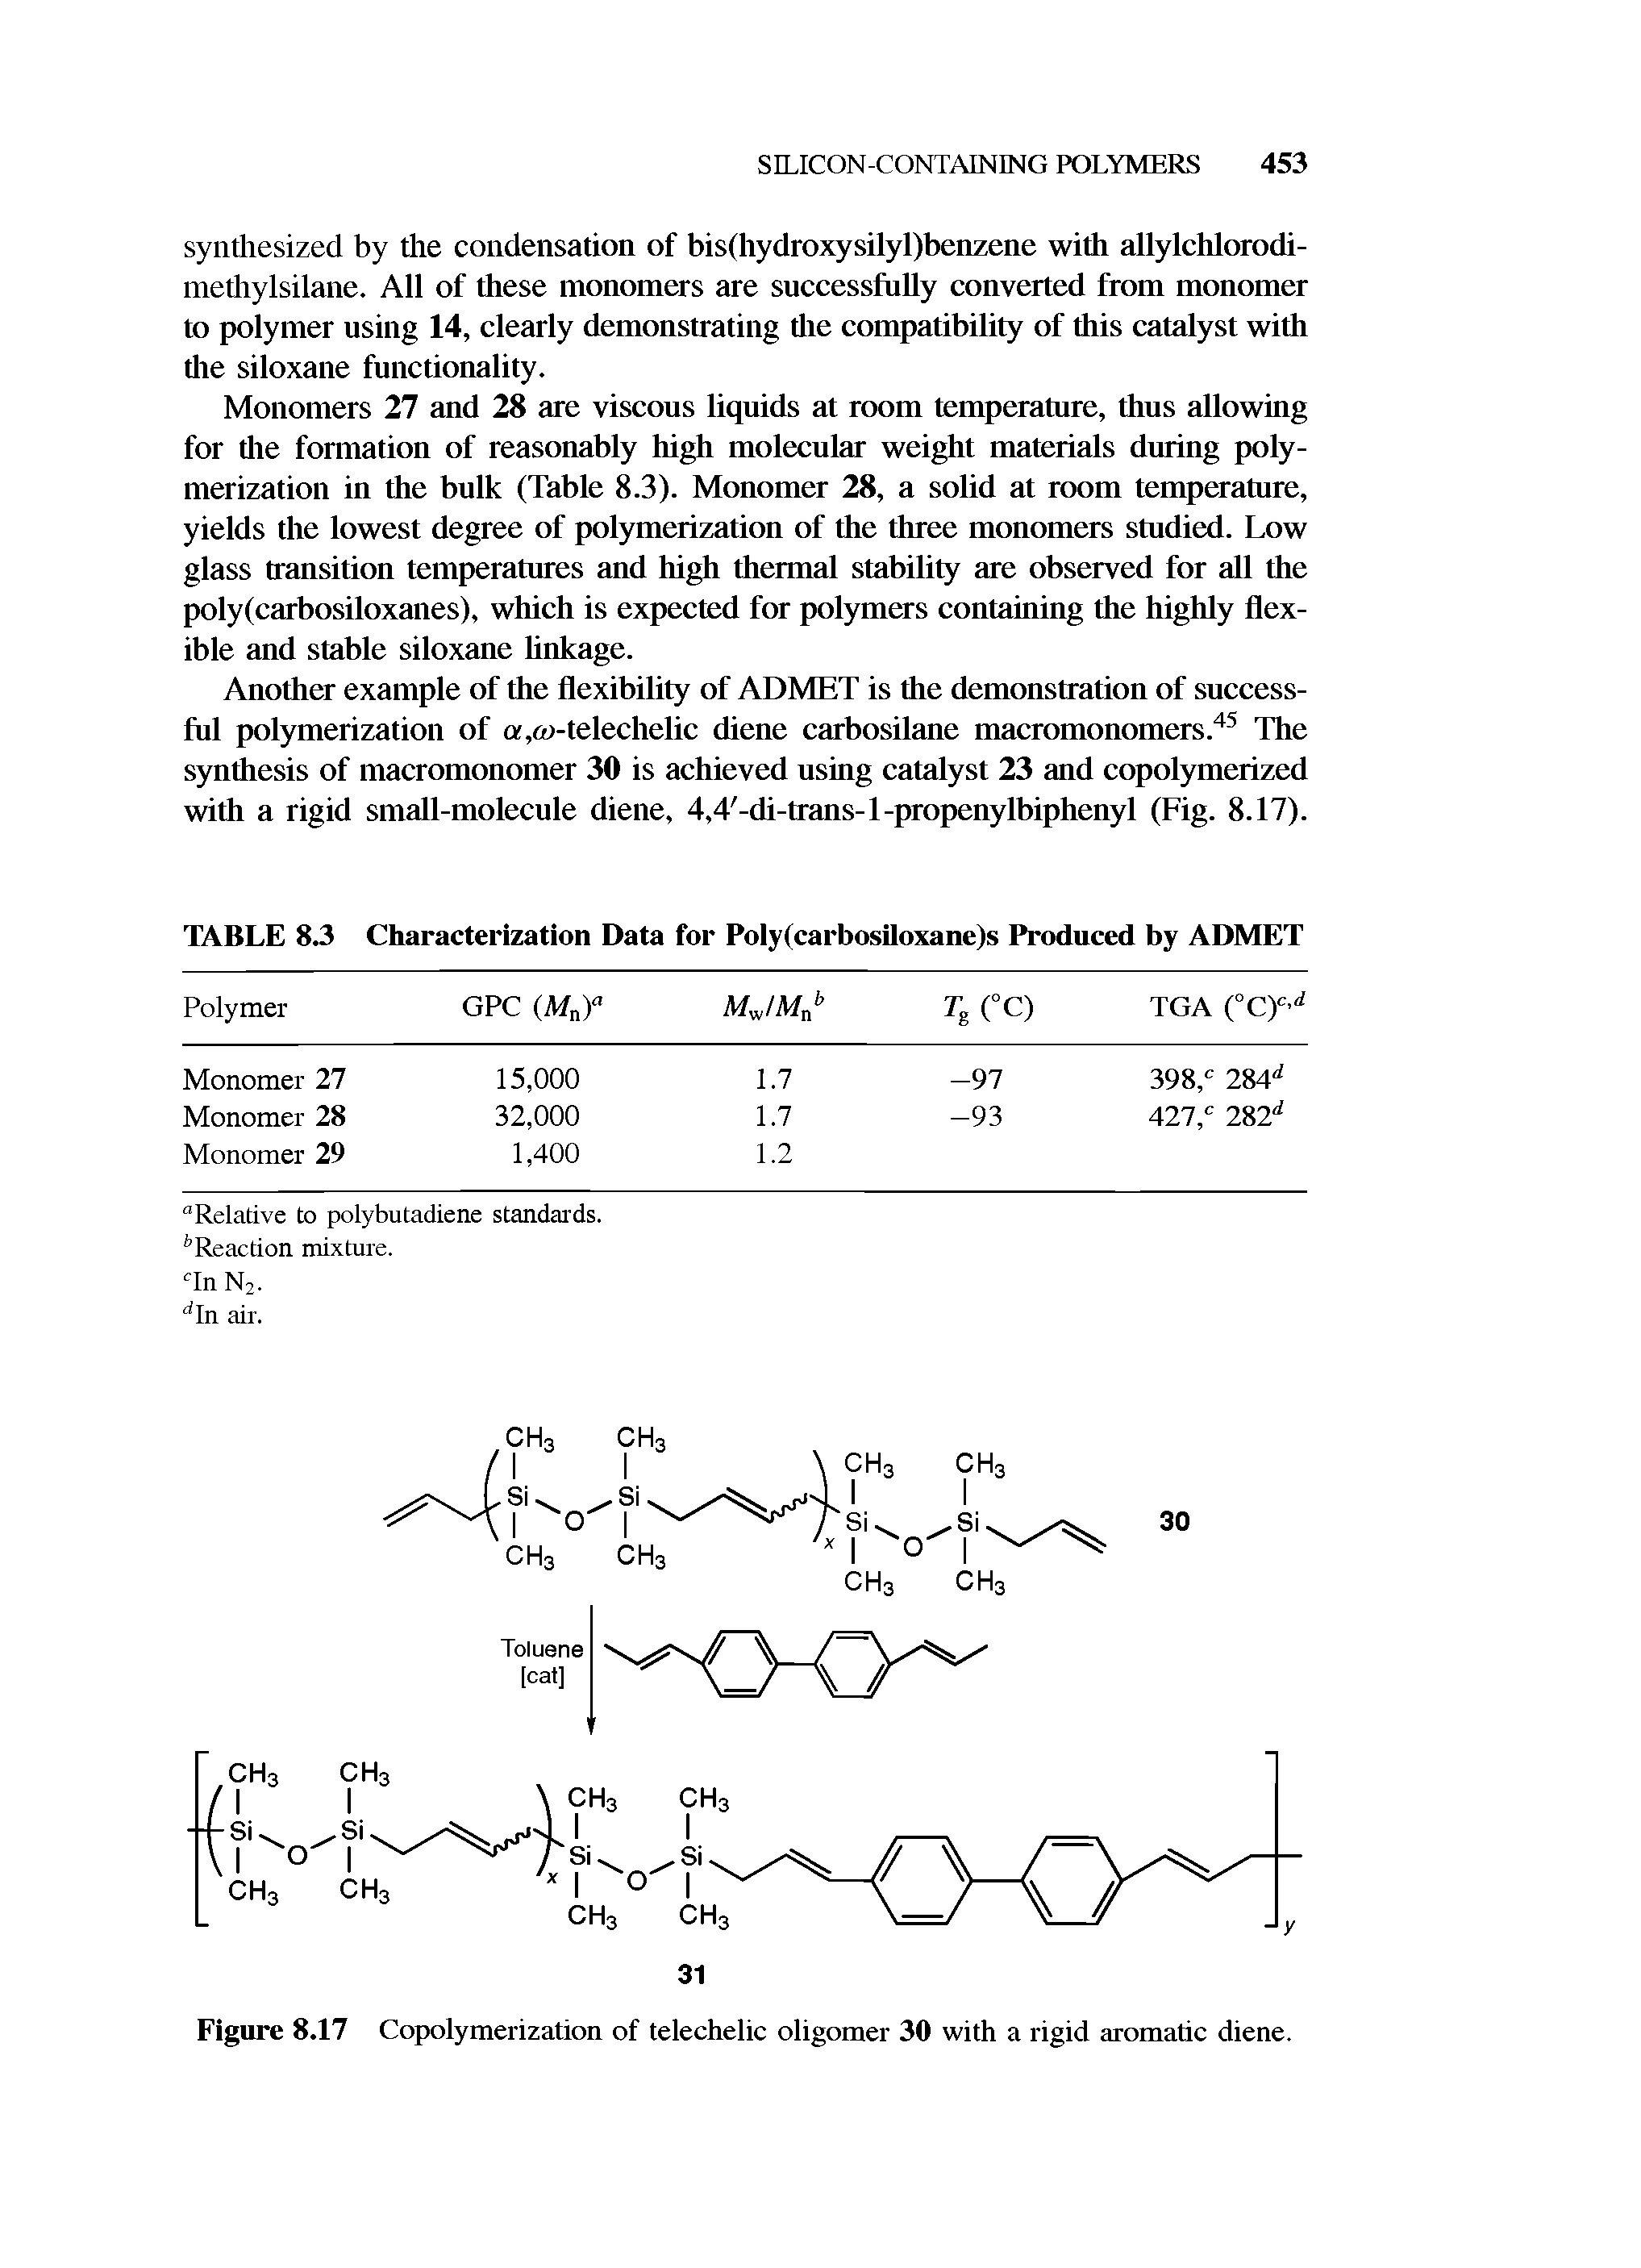 Figure 8.17 Copolymerization of telechelic oligomer 30 with a rigid aromatic diene.